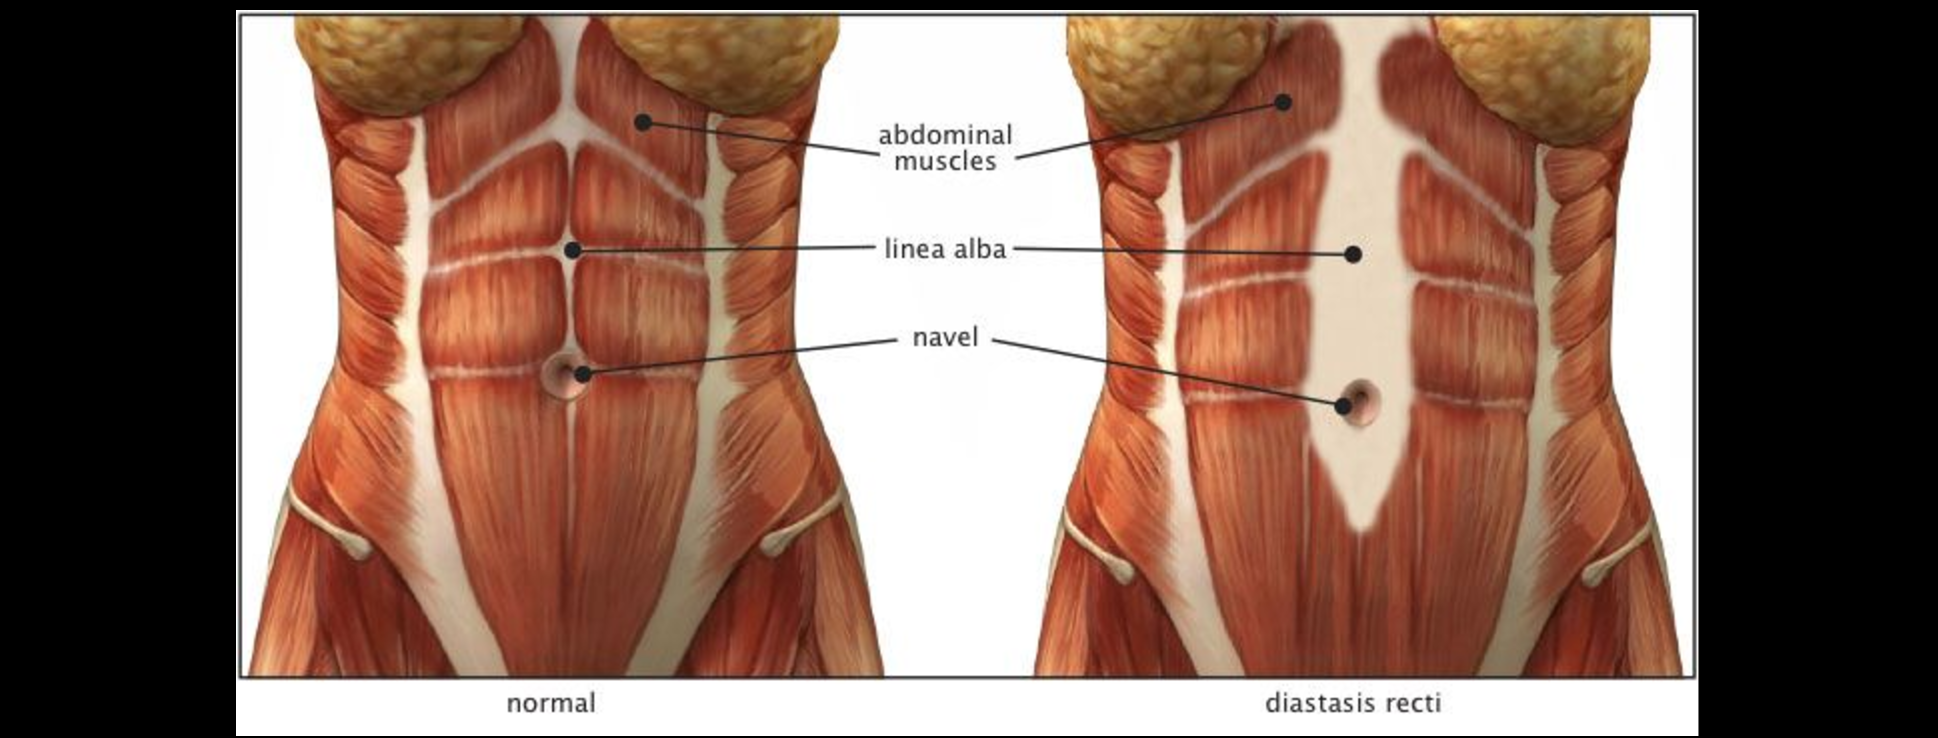 Мышцы живота у женщин фото спереди